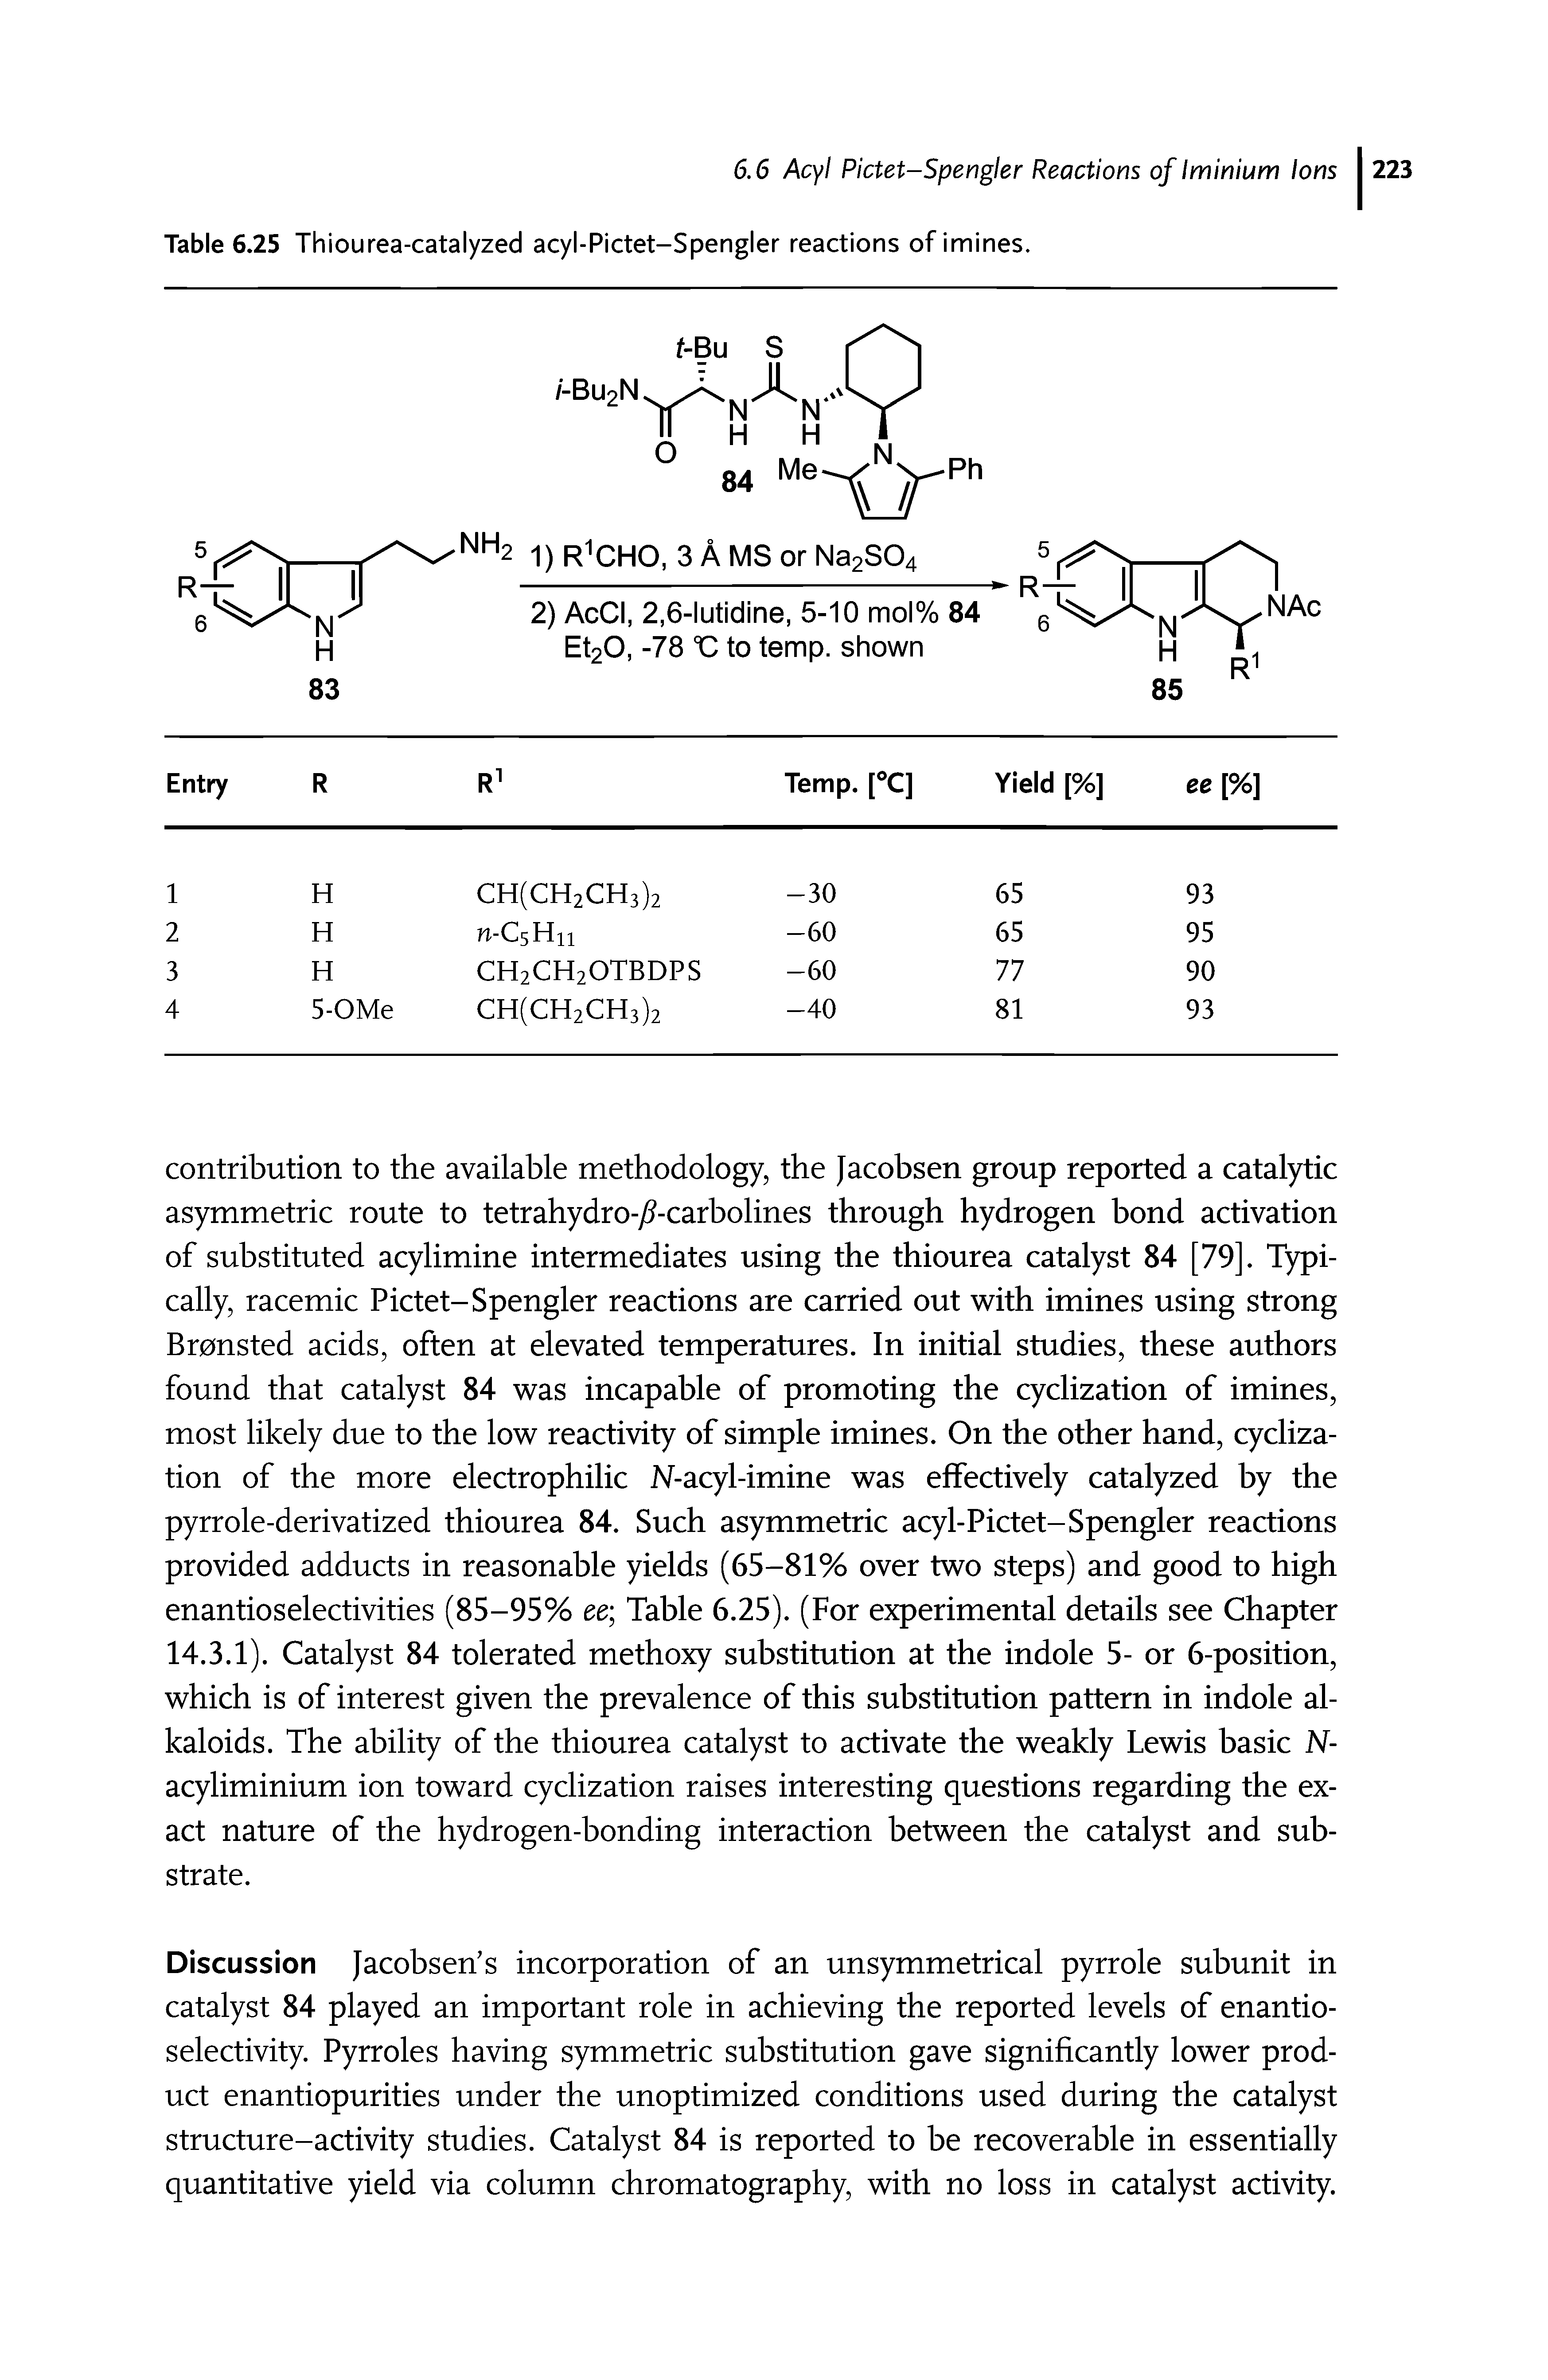 Table 6.25 Thiourea-catalyzed acyl-Pictet-Spengler reactions of imines.